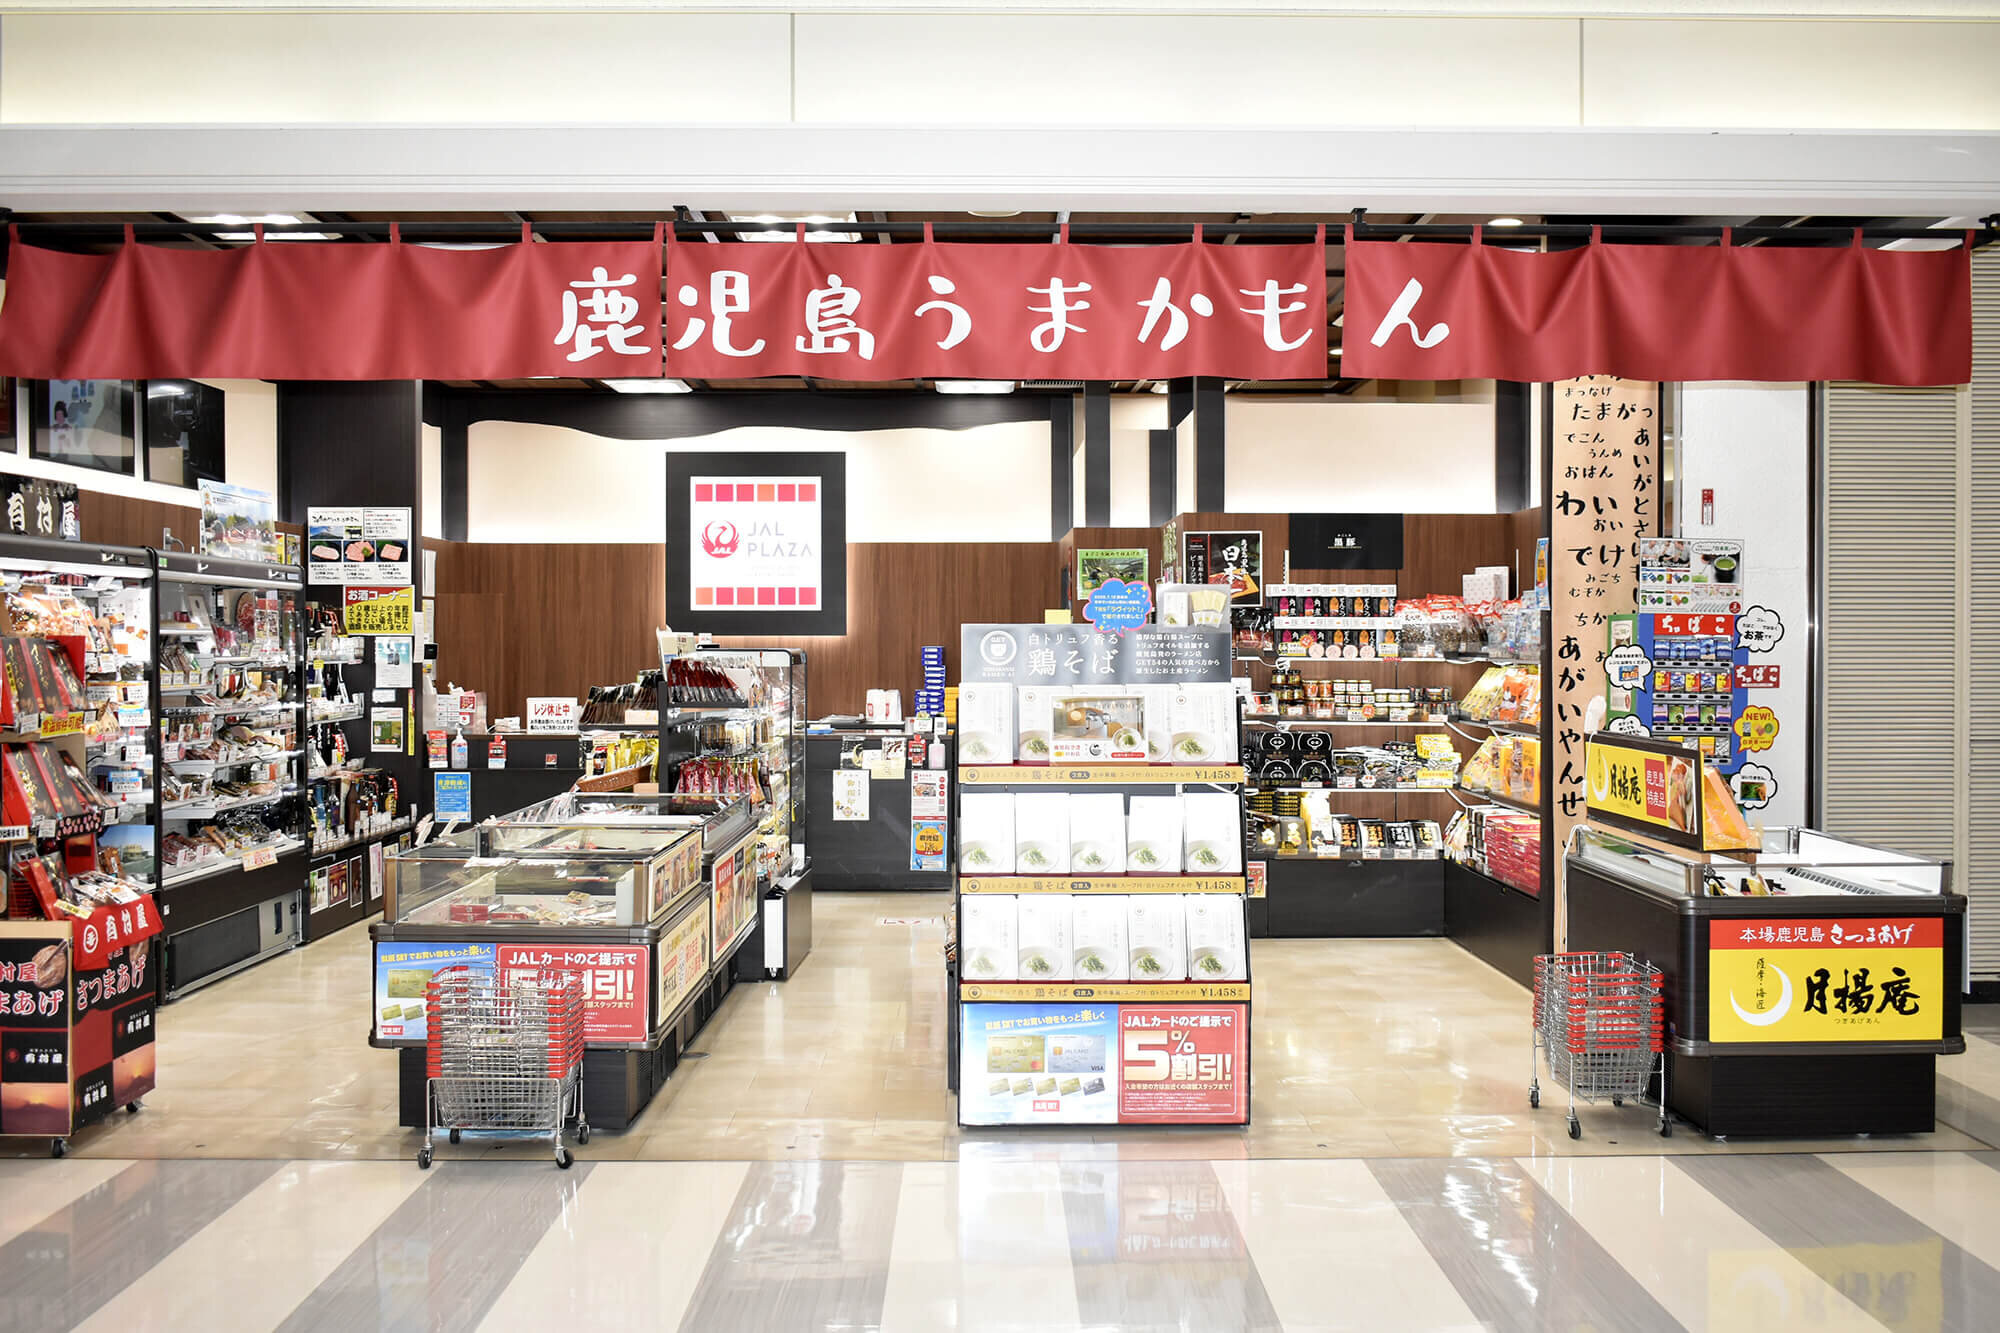 JAL PLAZA (Kagoshima Airport 2nd Shop)